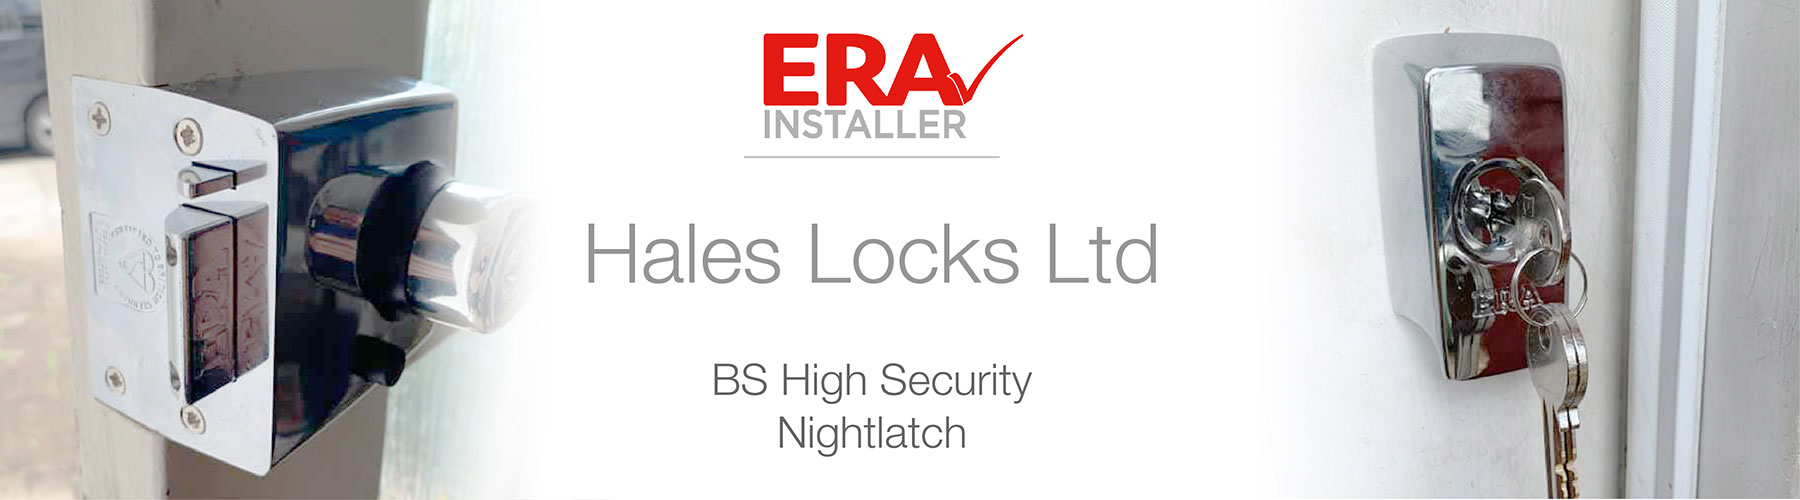 ERA Installer Testimonial Hales Locks